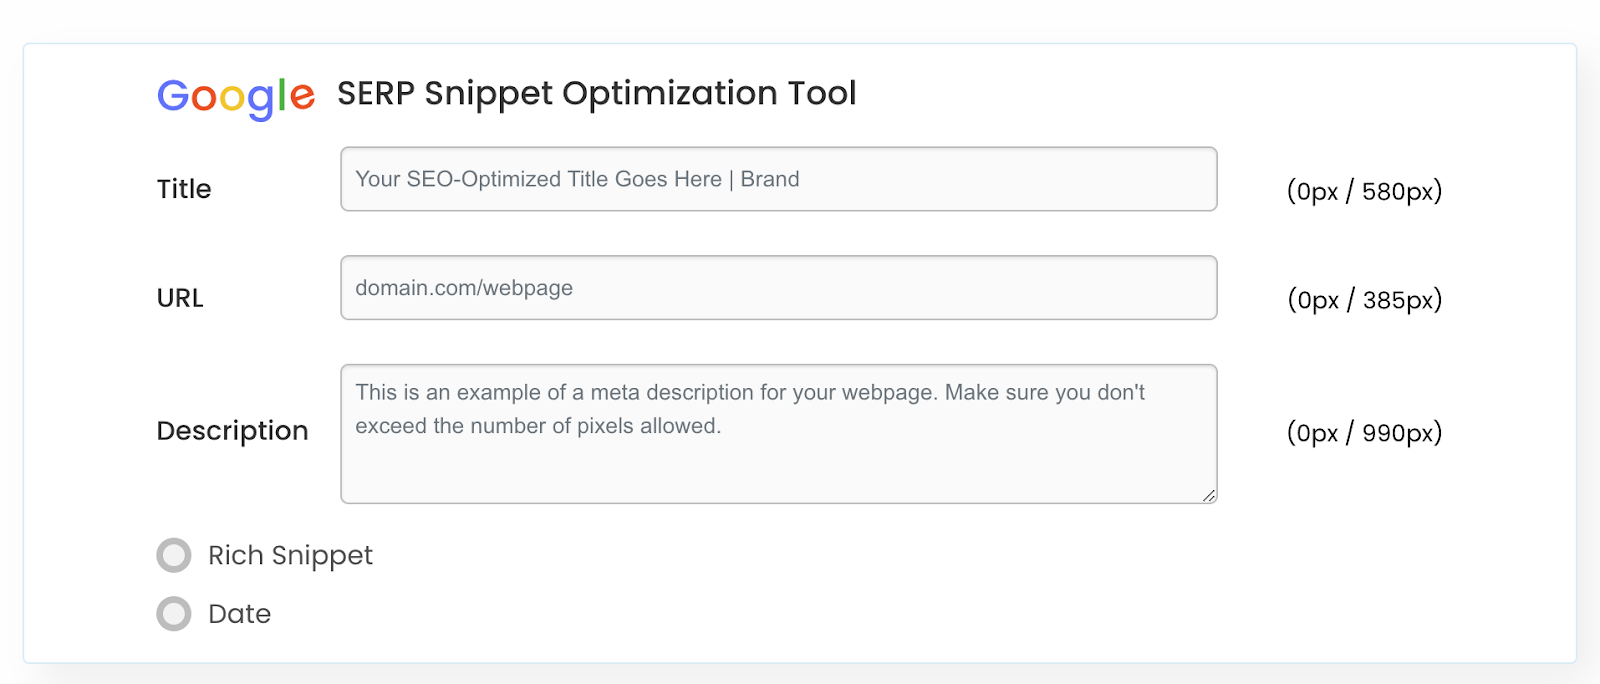 Google's SERP snippet optimization tool